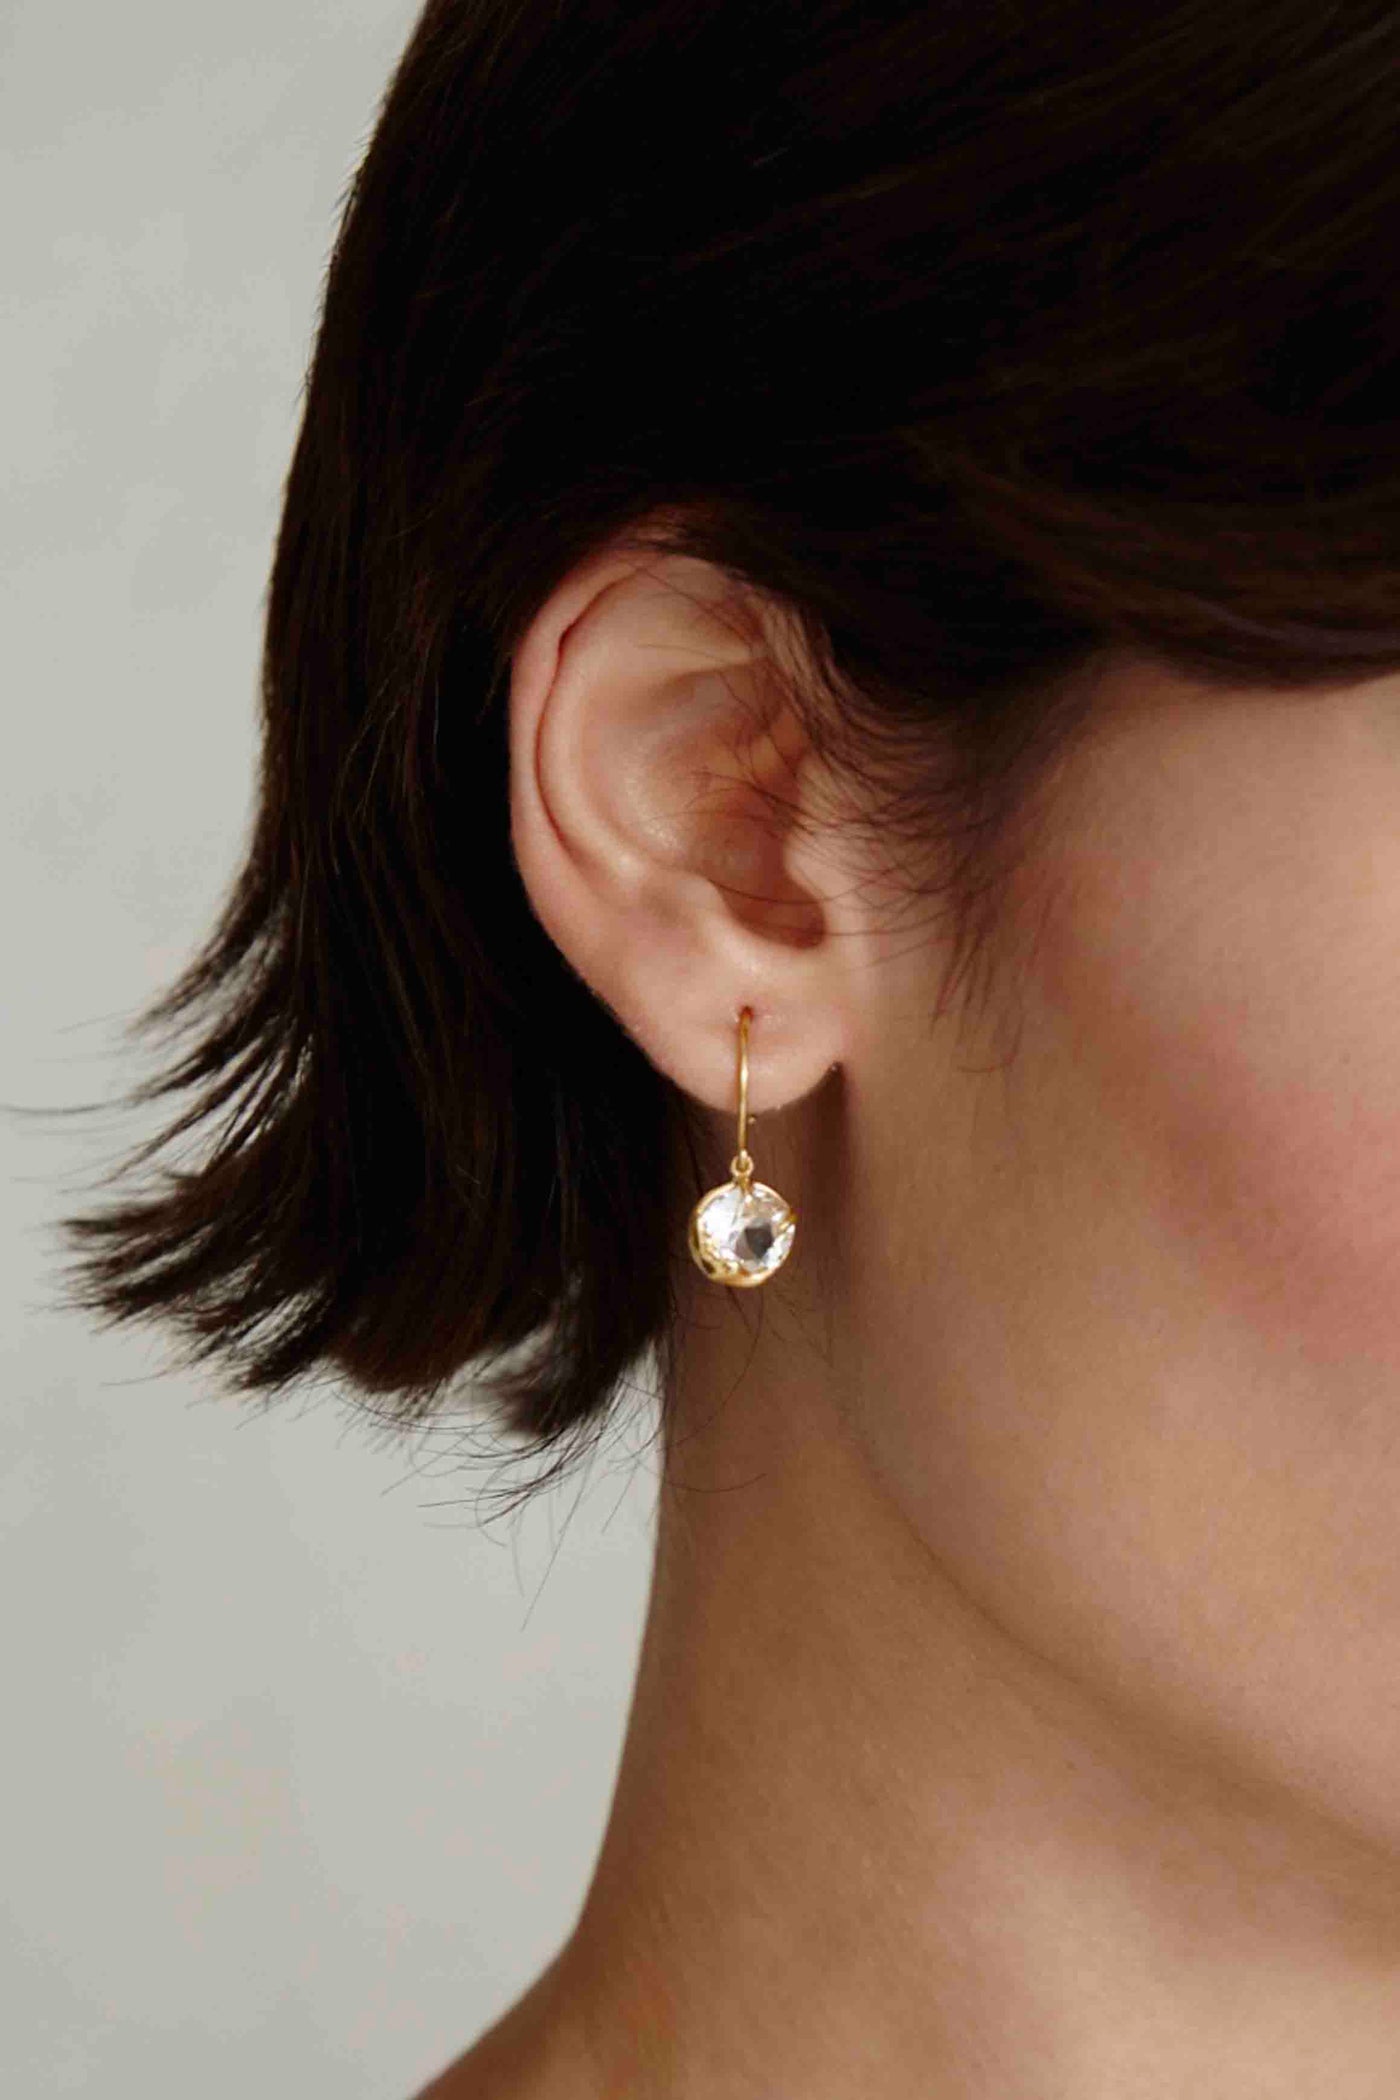 Model wearing the April Diamond Faceted Crystal Birthstone Earrings by Chan Luu